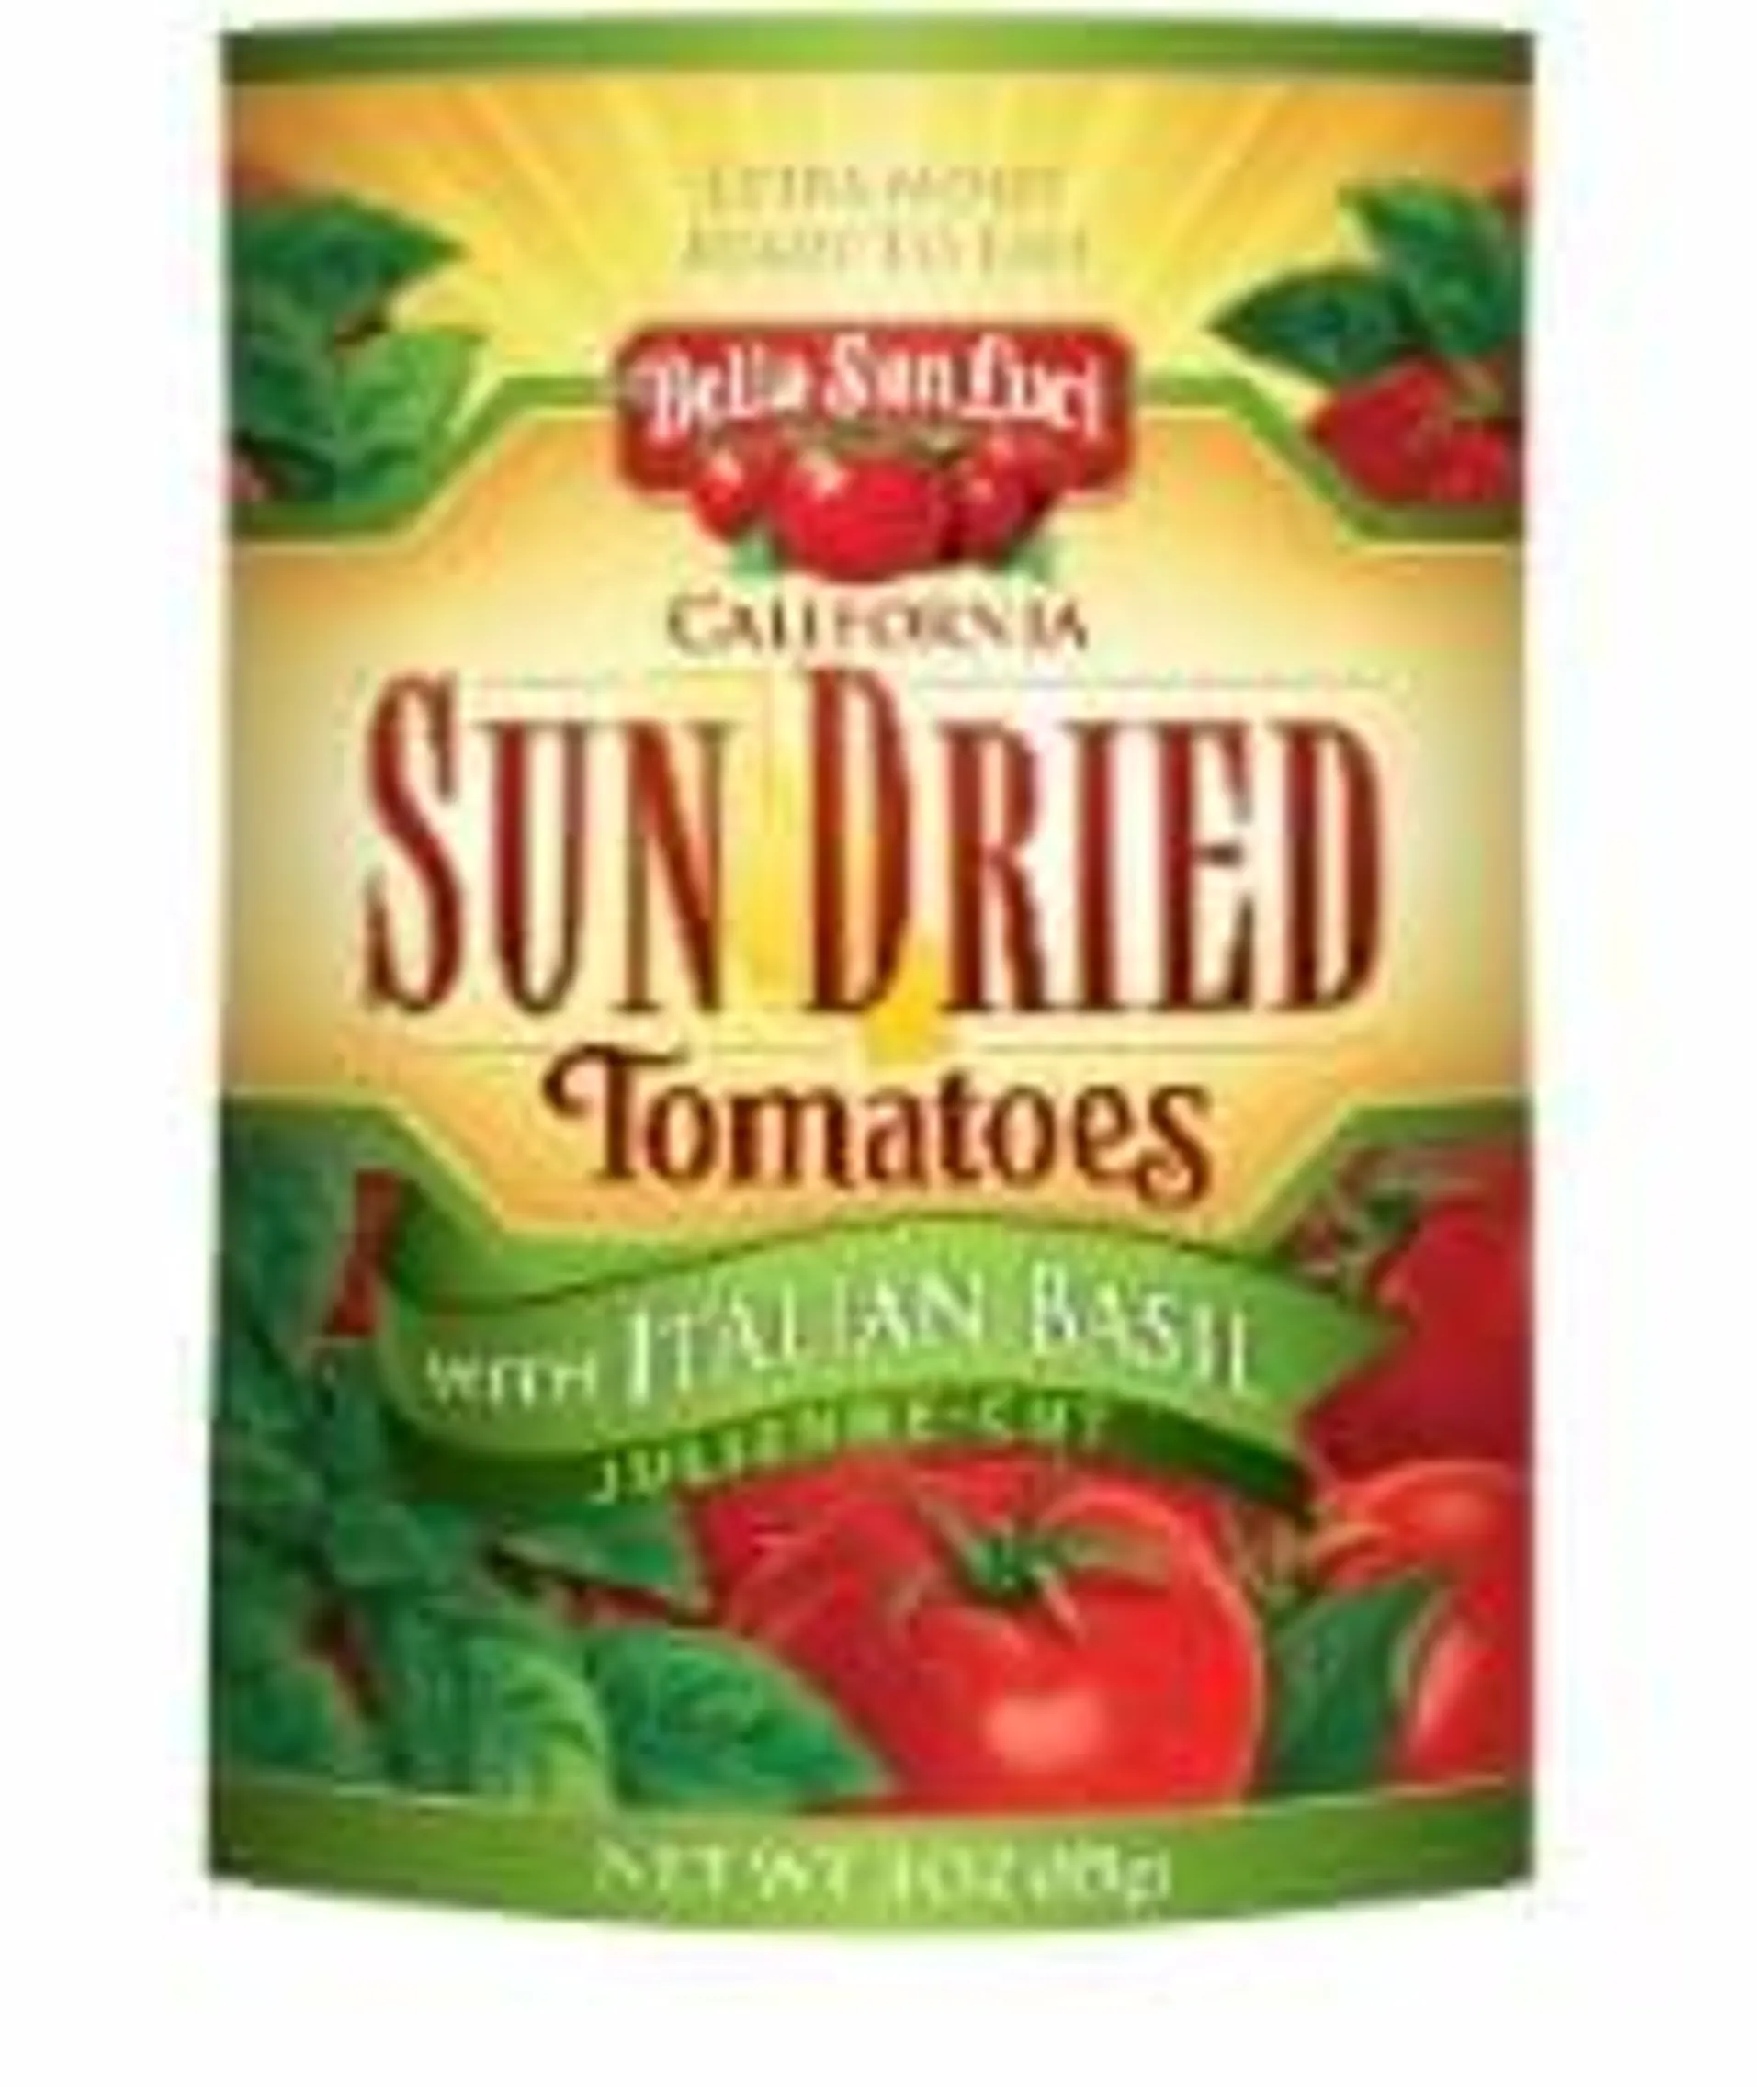 Bella Sun Luci: Sun Dried Tomatoes with Italian Basil Julienne Cut, 3 Oz (Pack of 6)